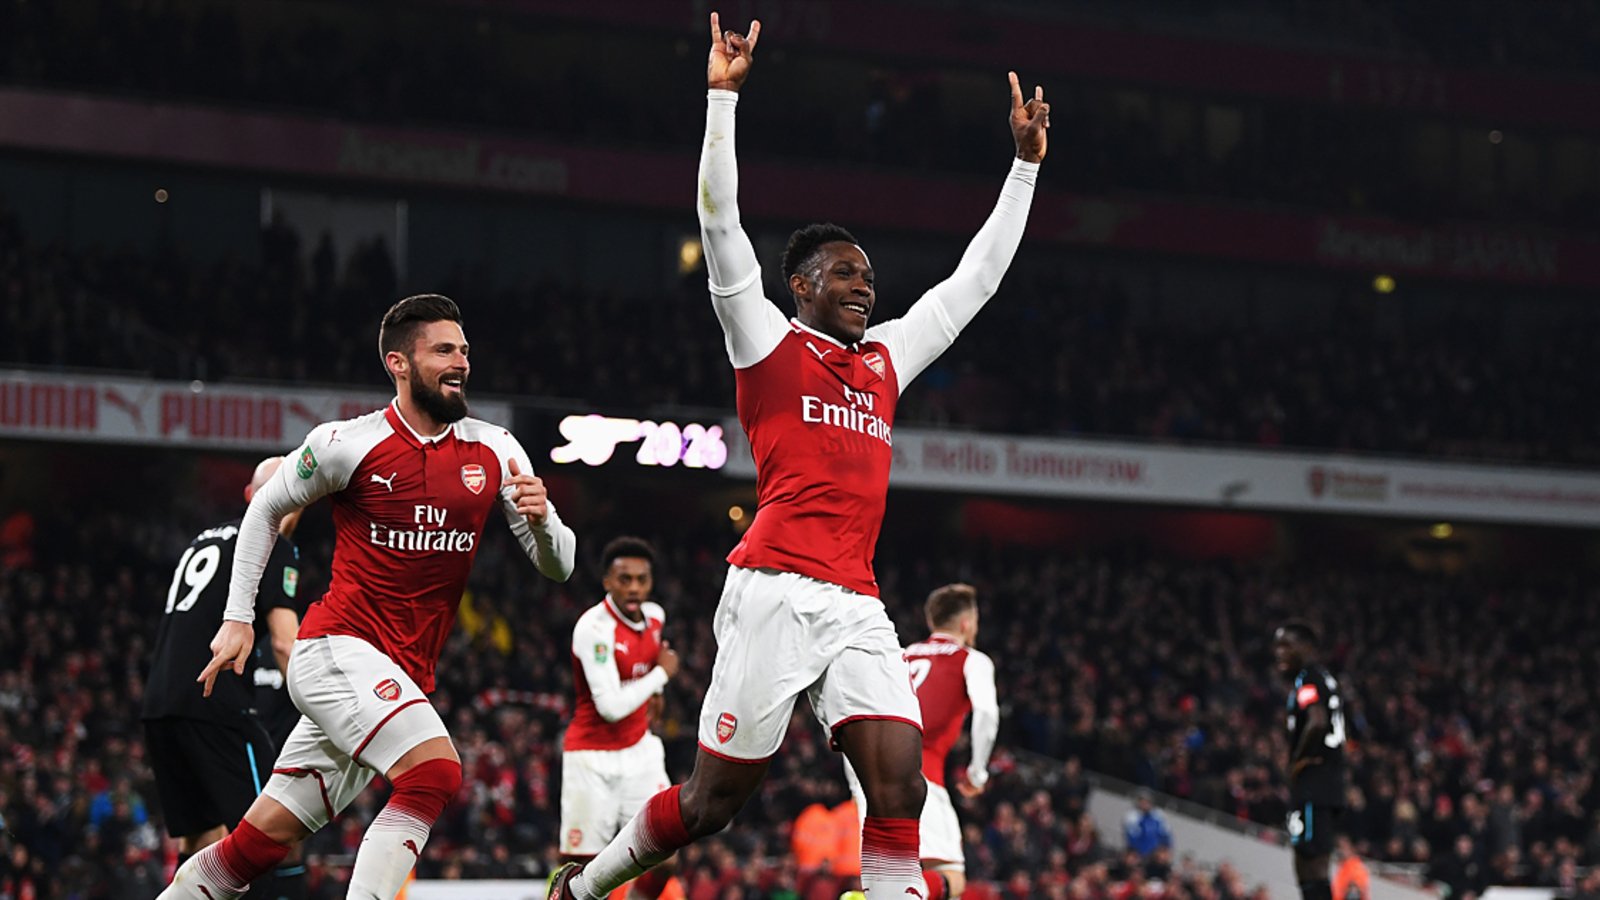 Carabao Cup semi-final fixture confirmation | News | Arsenal.com